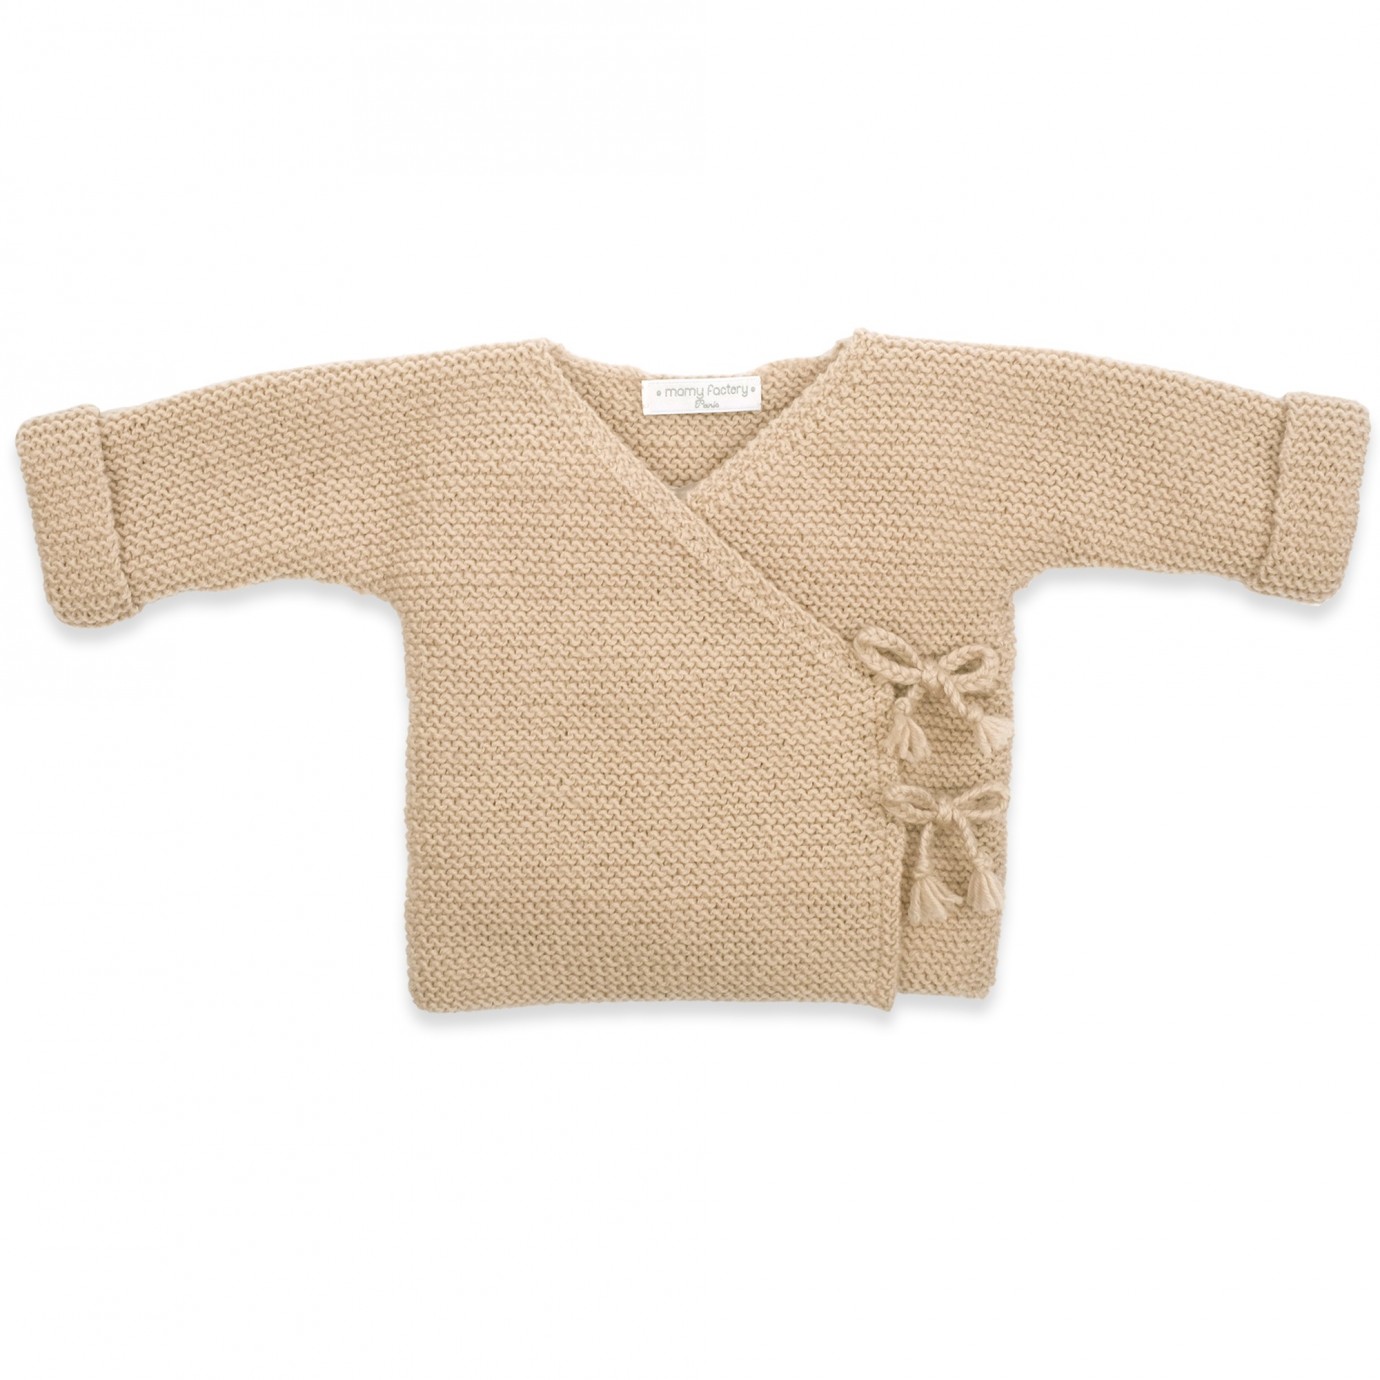 Brassiere bebe garcon 6 a 9 mois tricot fait main - Un grand marché